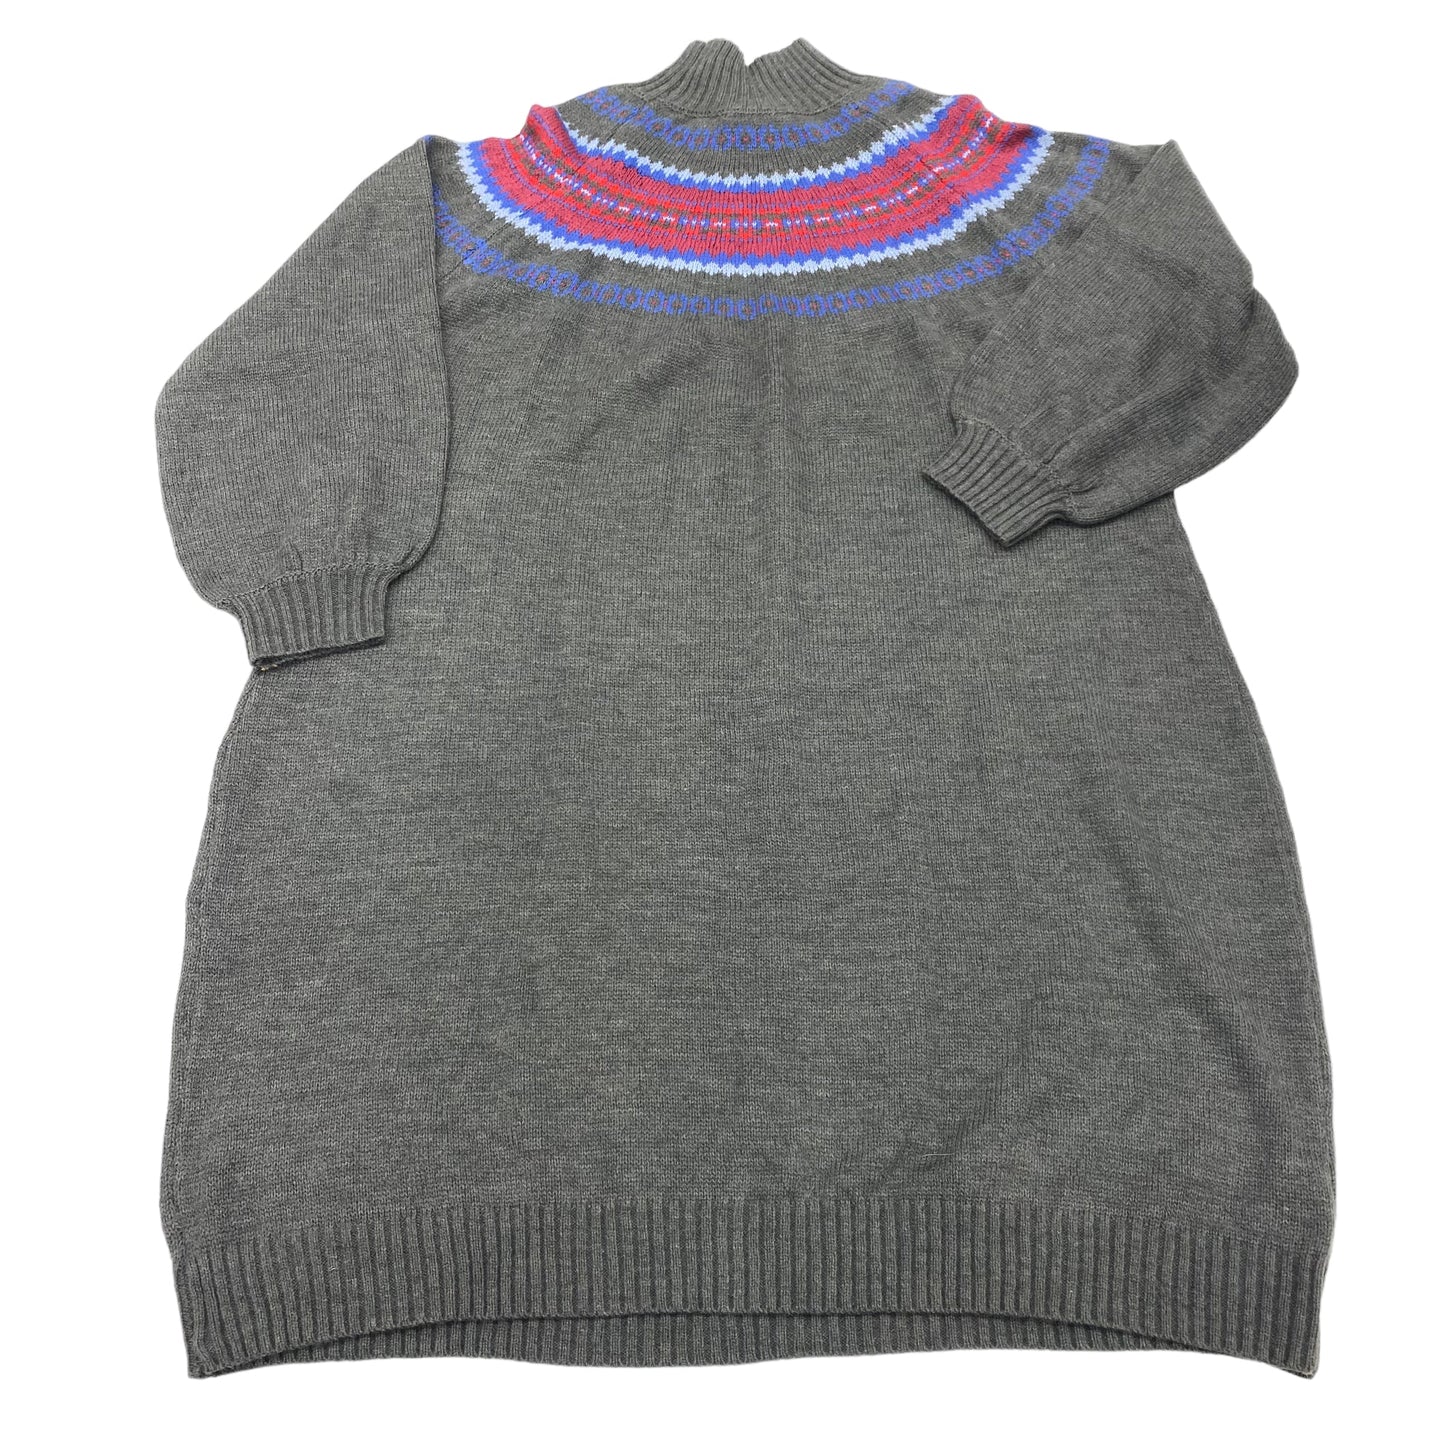 Dress Sweater By Lane Bryant  Size: 1x